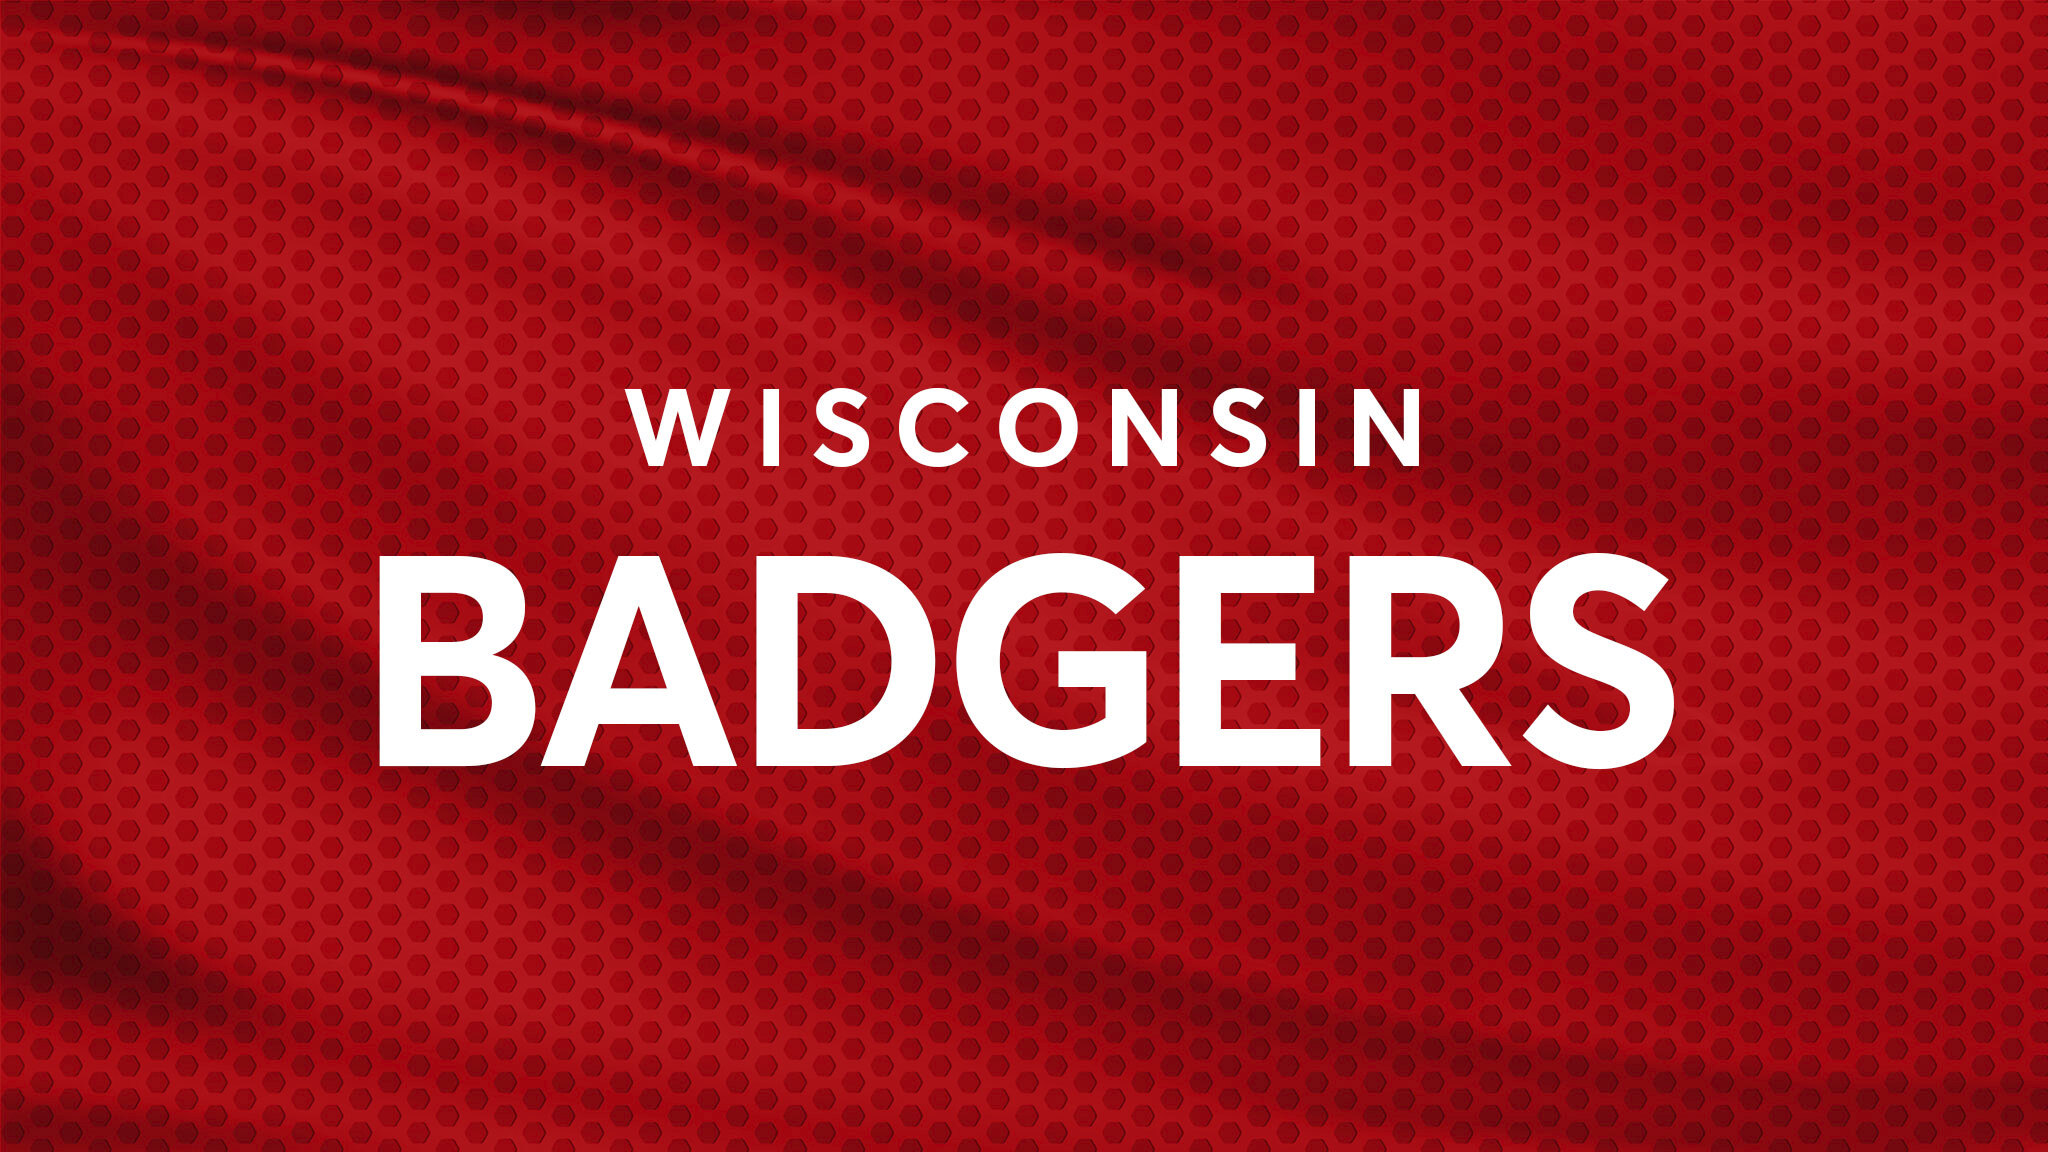 Wisconsin Badgers Football vs. Minnesota Gophers Football